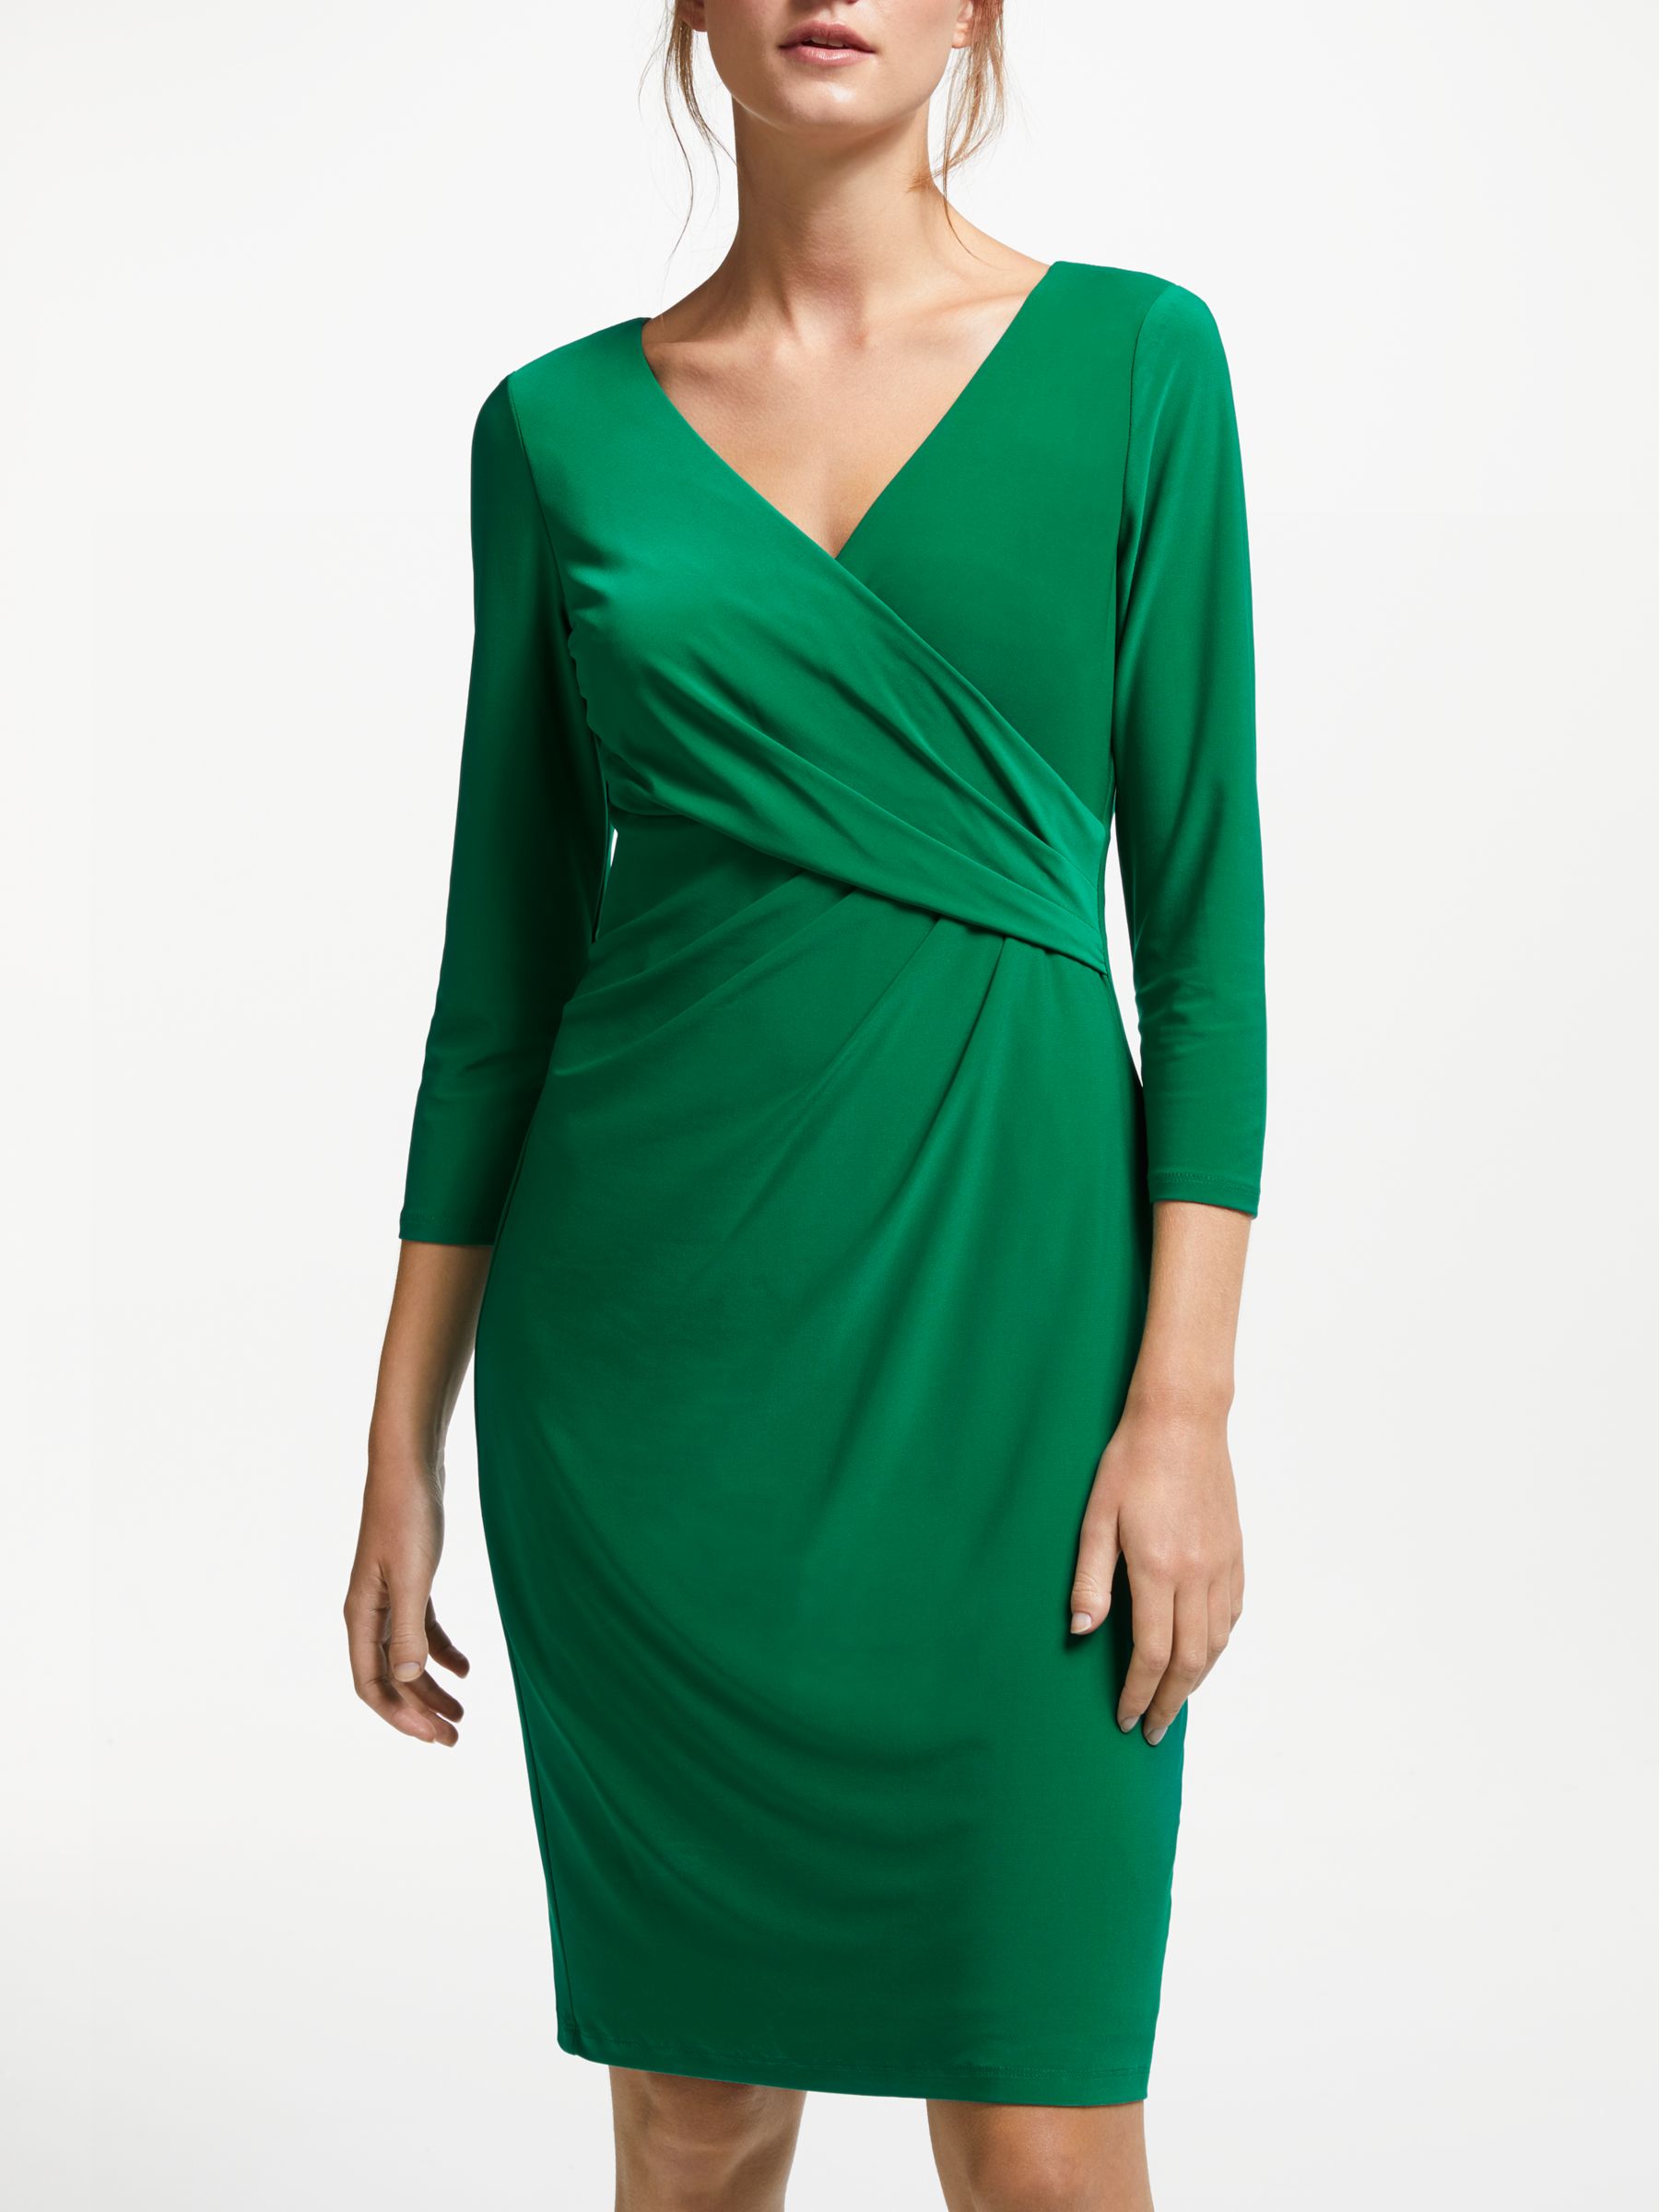 Lauren Ralph Lauren Cleora Ruched Dress, Lush Emerald